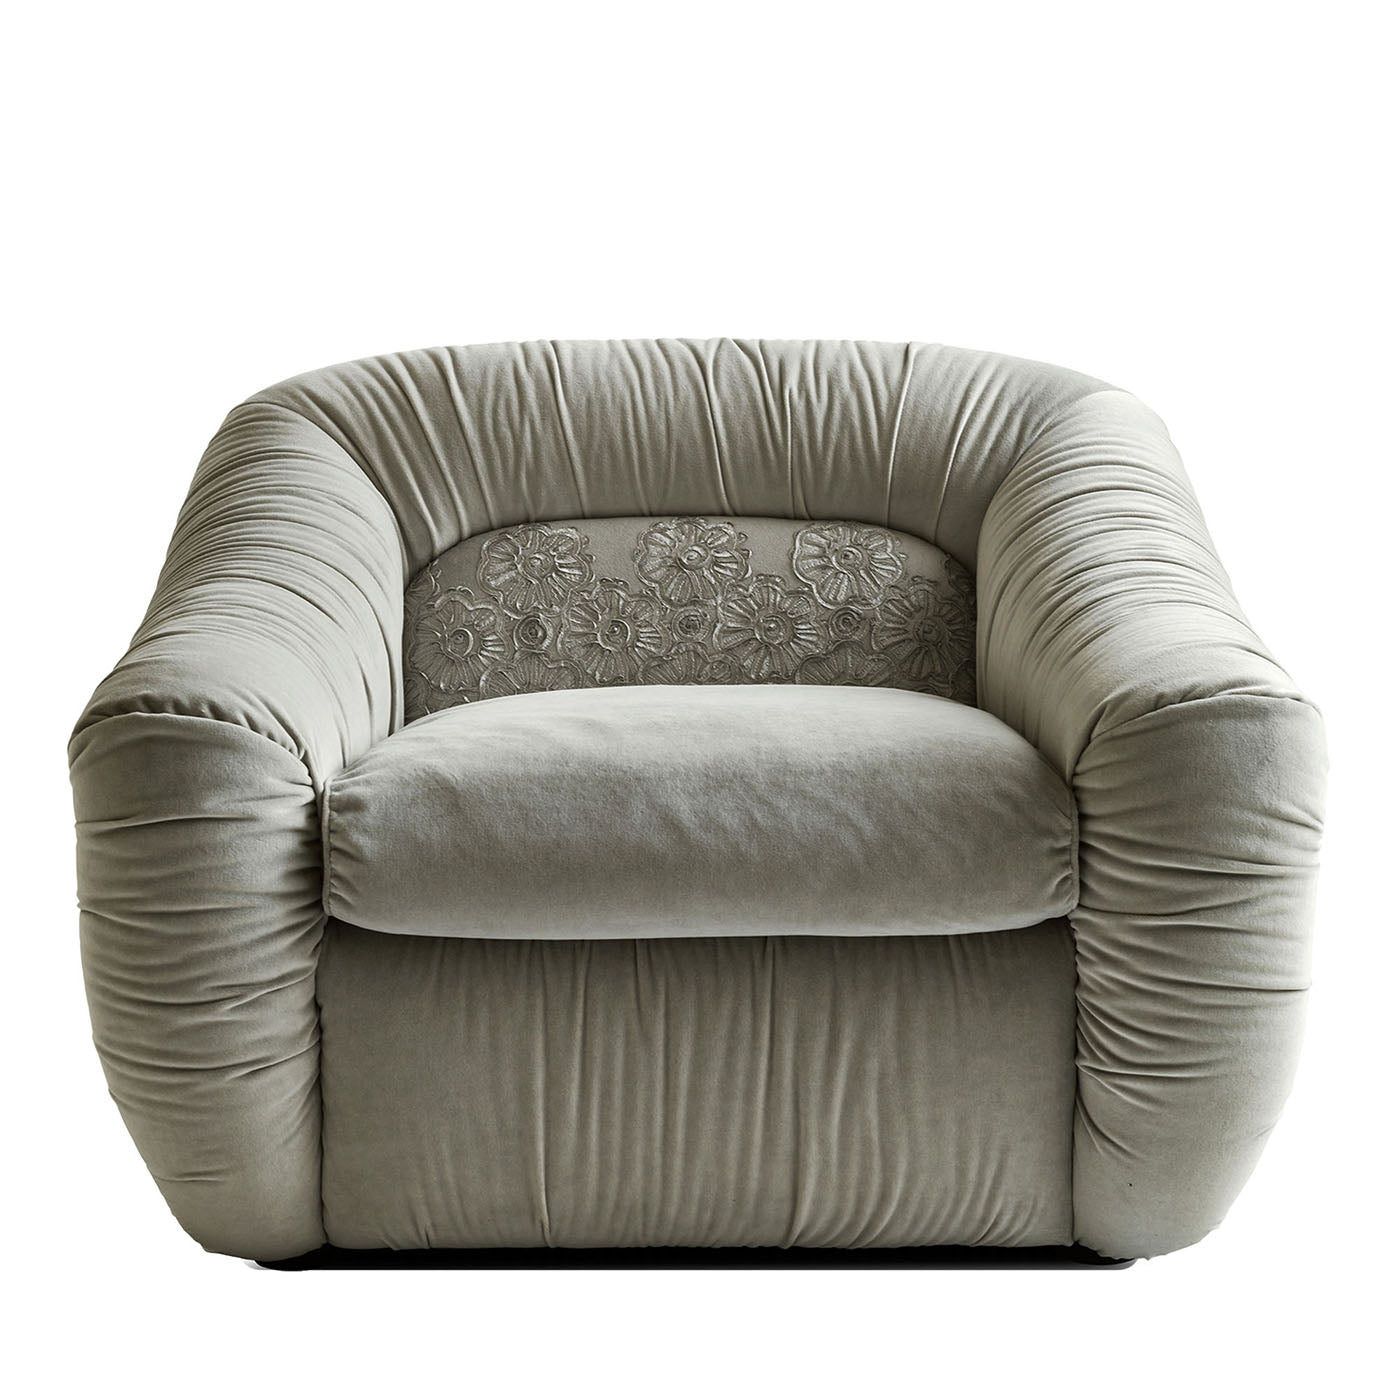 Fiori Chiari Embroidered Gray Fabric Armchair - Main view